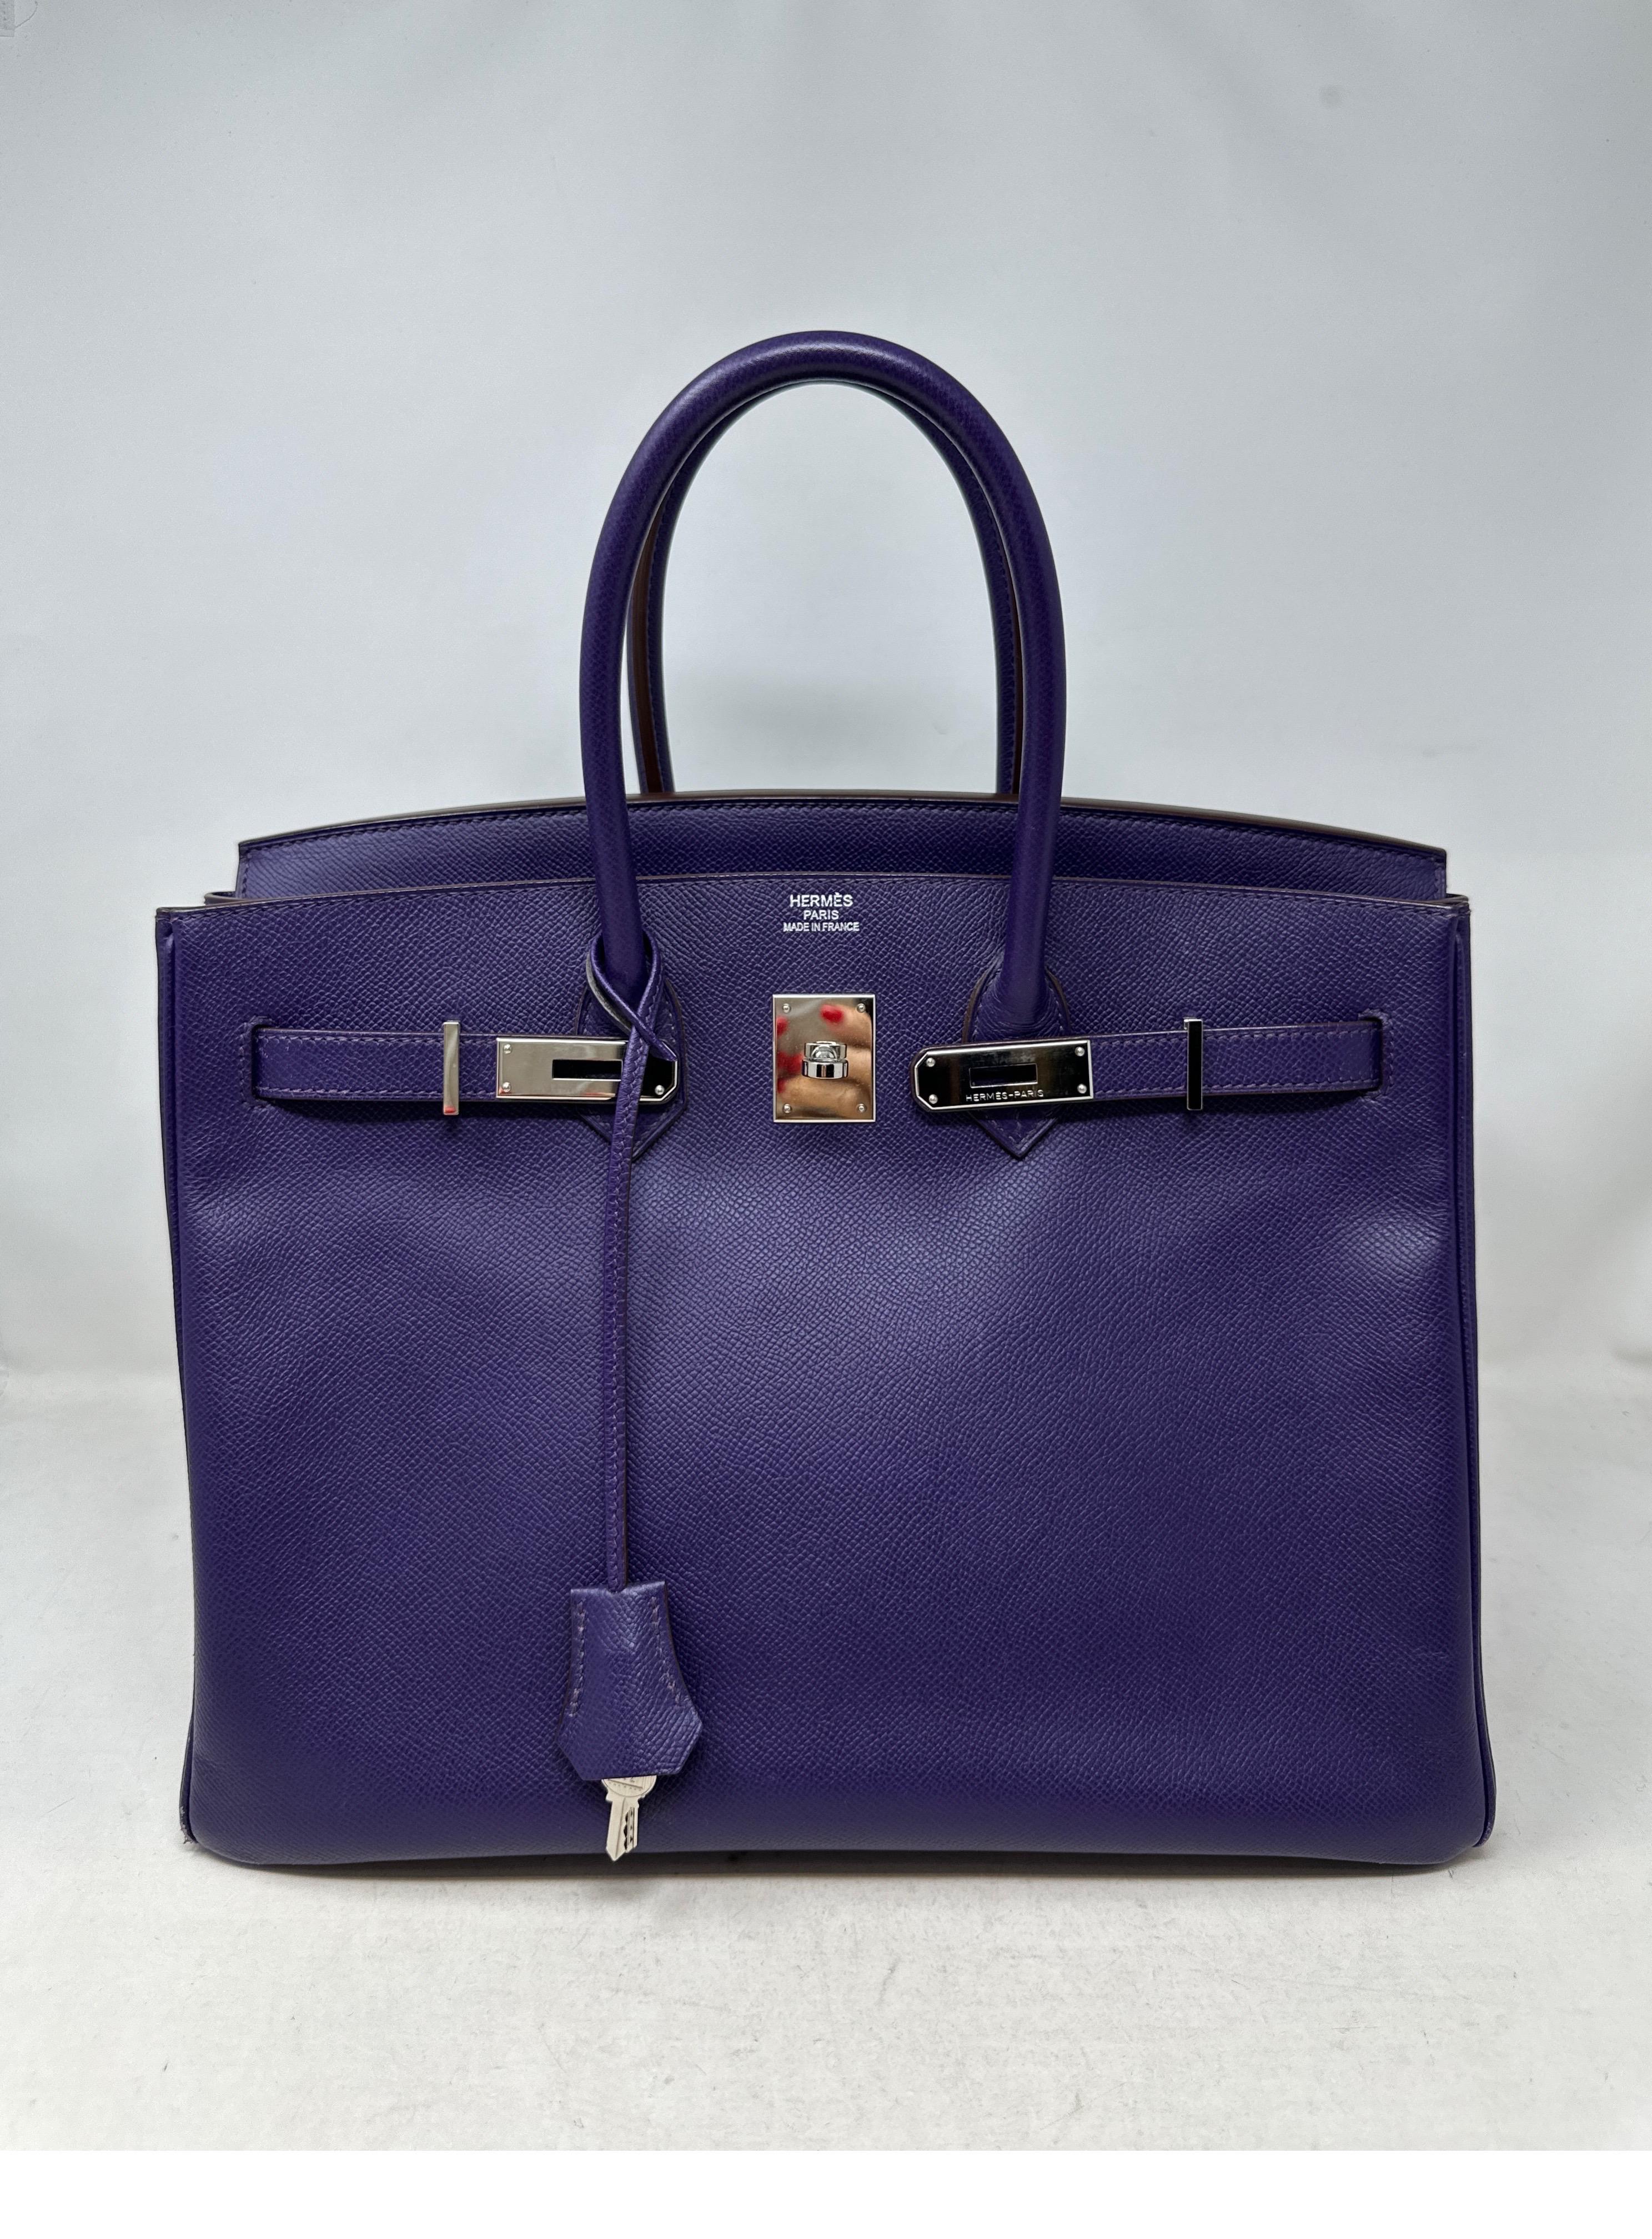 Hermes Purple Crocus Birkin 35 Bag. Unique purple color Birkin bag. Paladium hardware. Epsom leather. Interior clean. Corners have some wear. Includes clochette, lock, keys, and dust bag. Guaranteed authentic. 